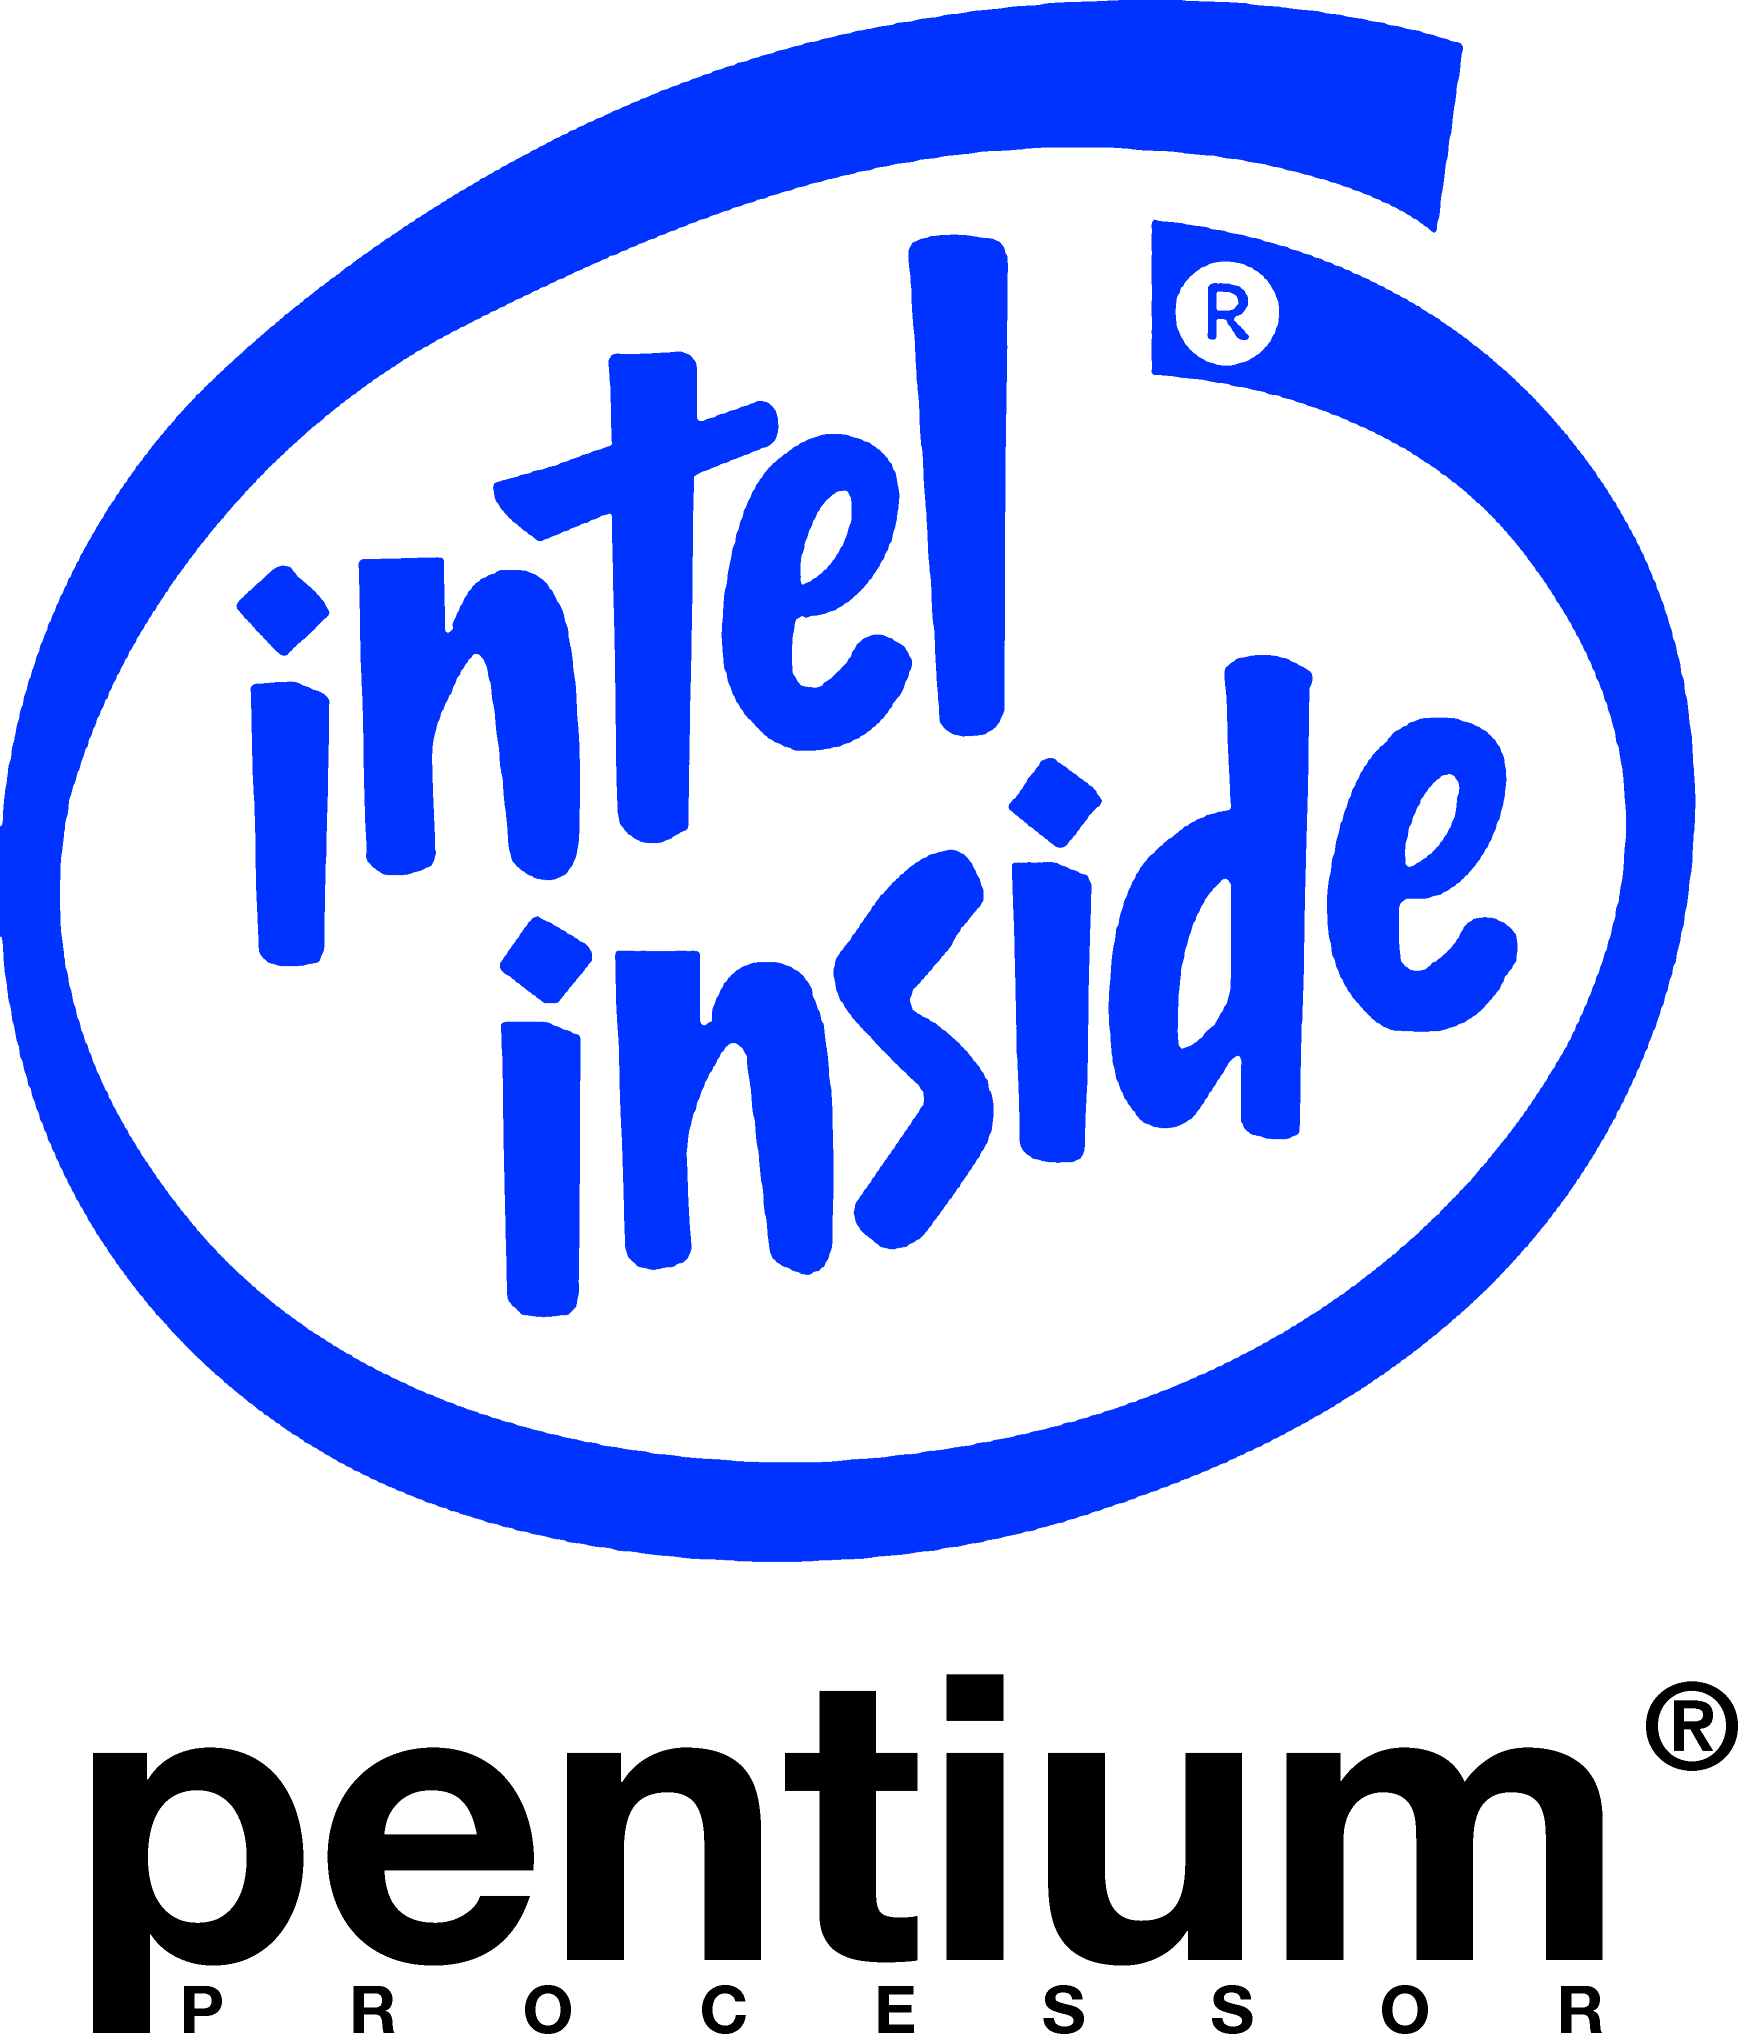 Pentium Logo - Intel Pentium | Logopedia | FANDOM powered by Wikia